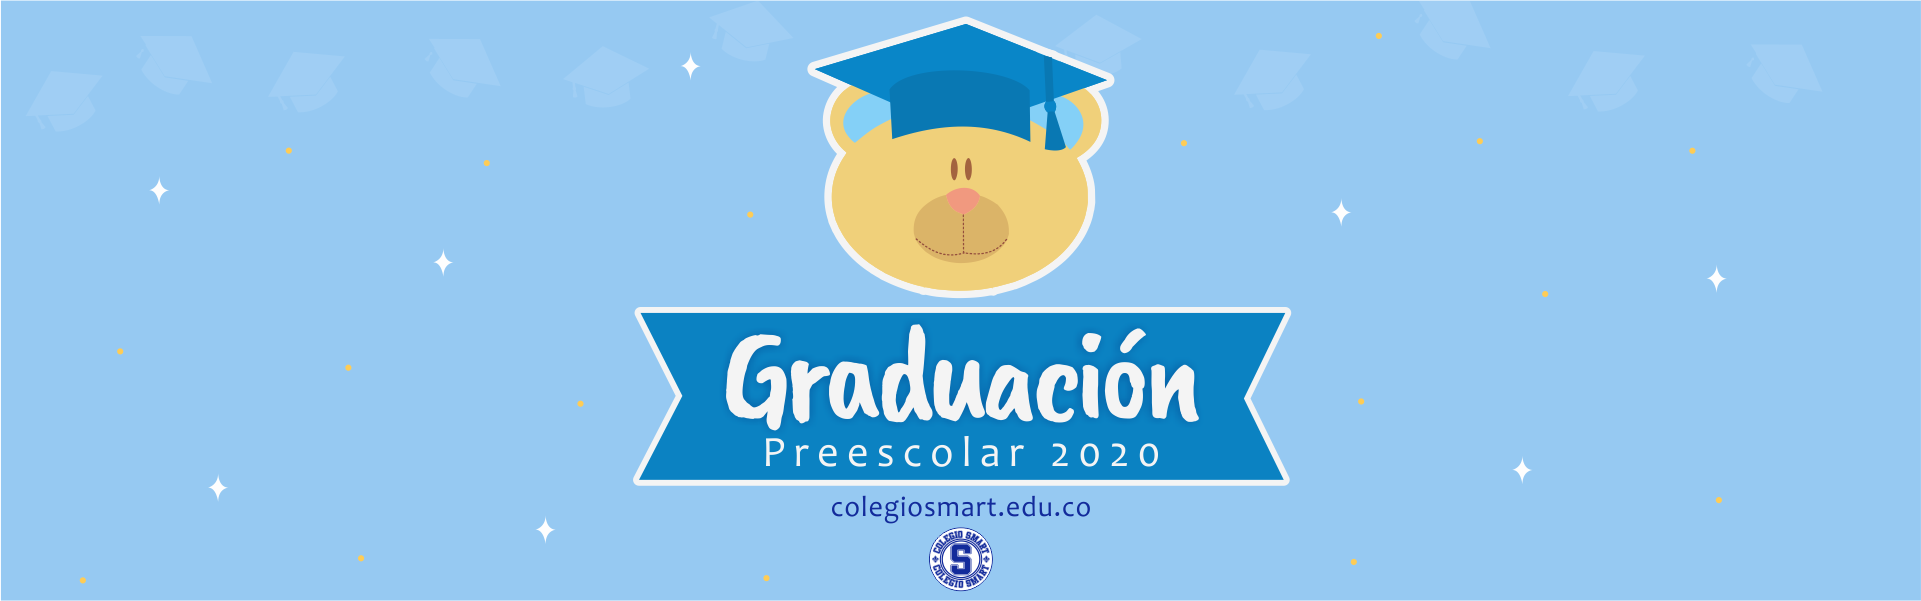 Graduación Preescolar 2020